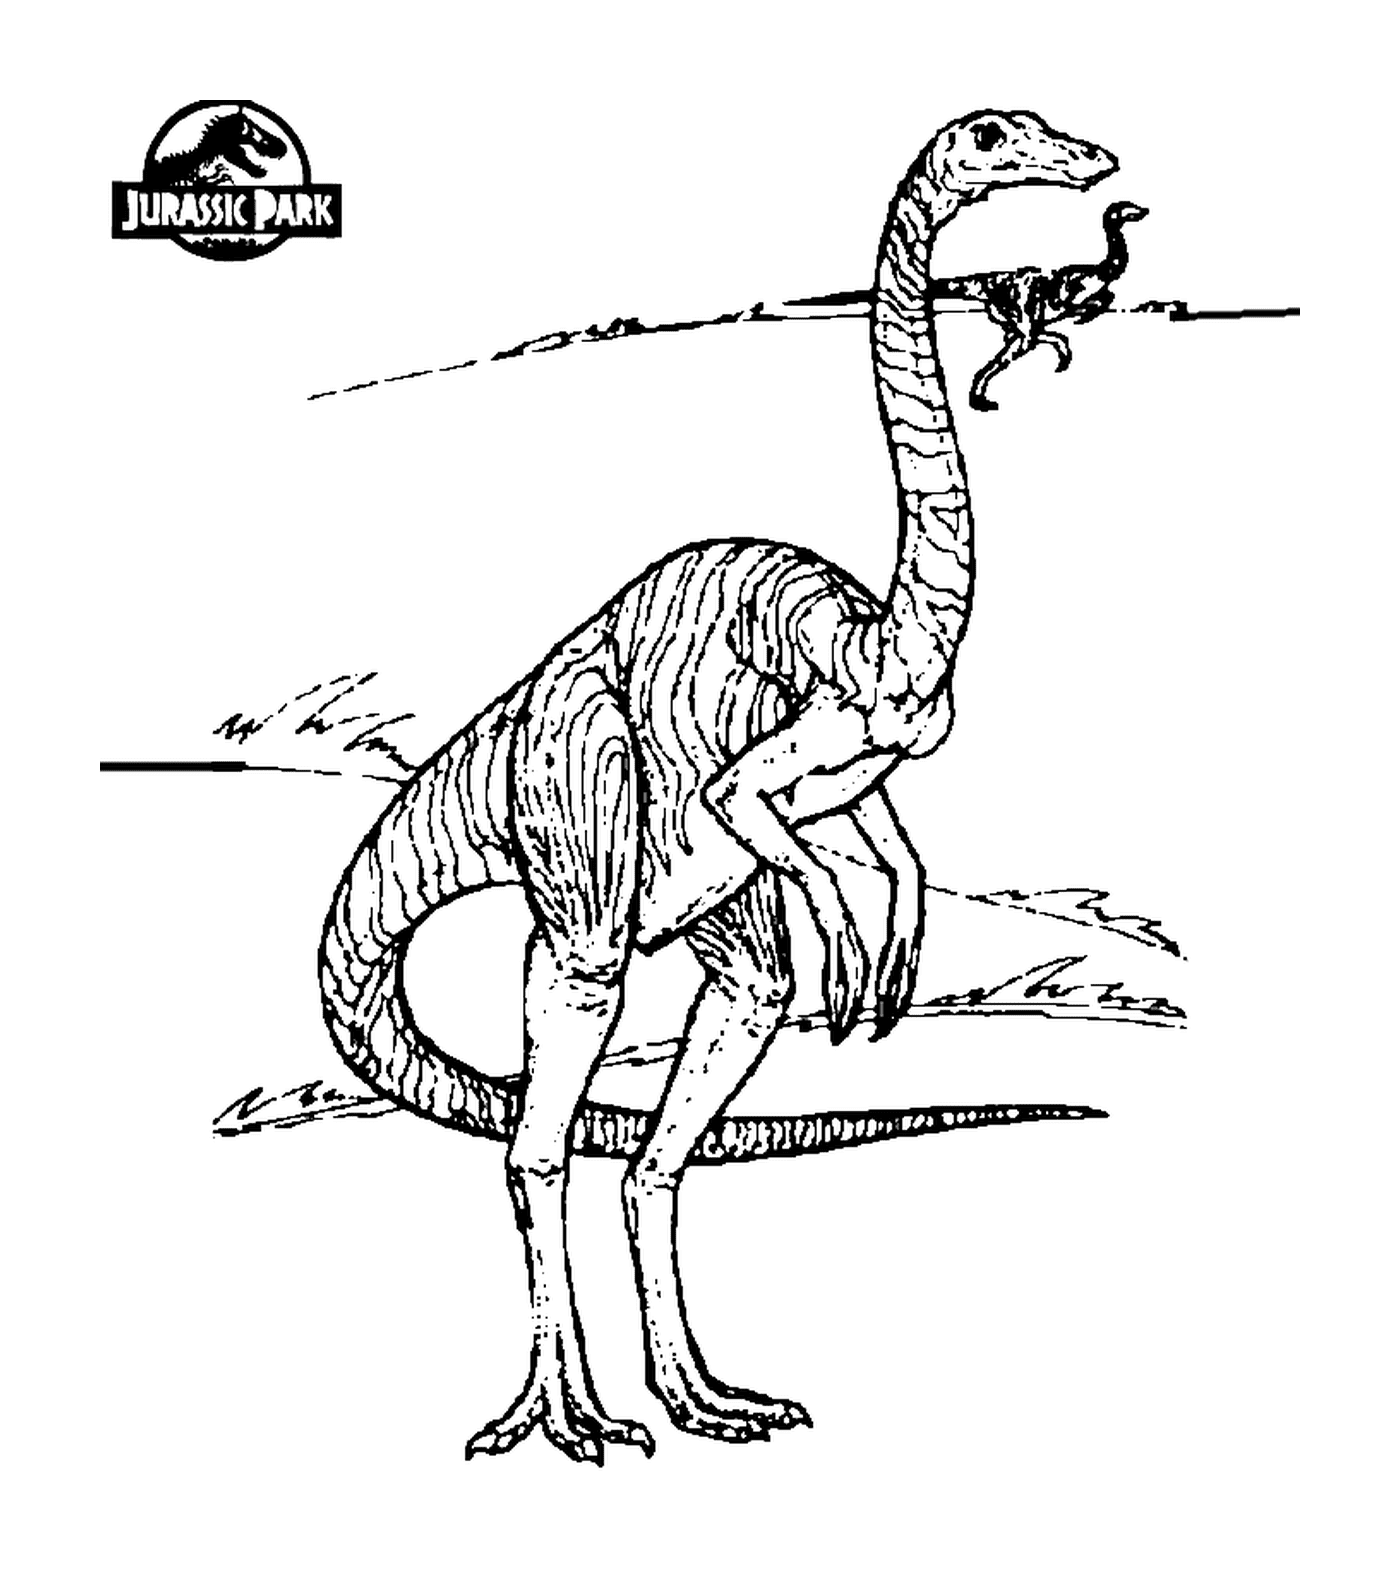  Jurassic Park, die Kunst der Illustration 